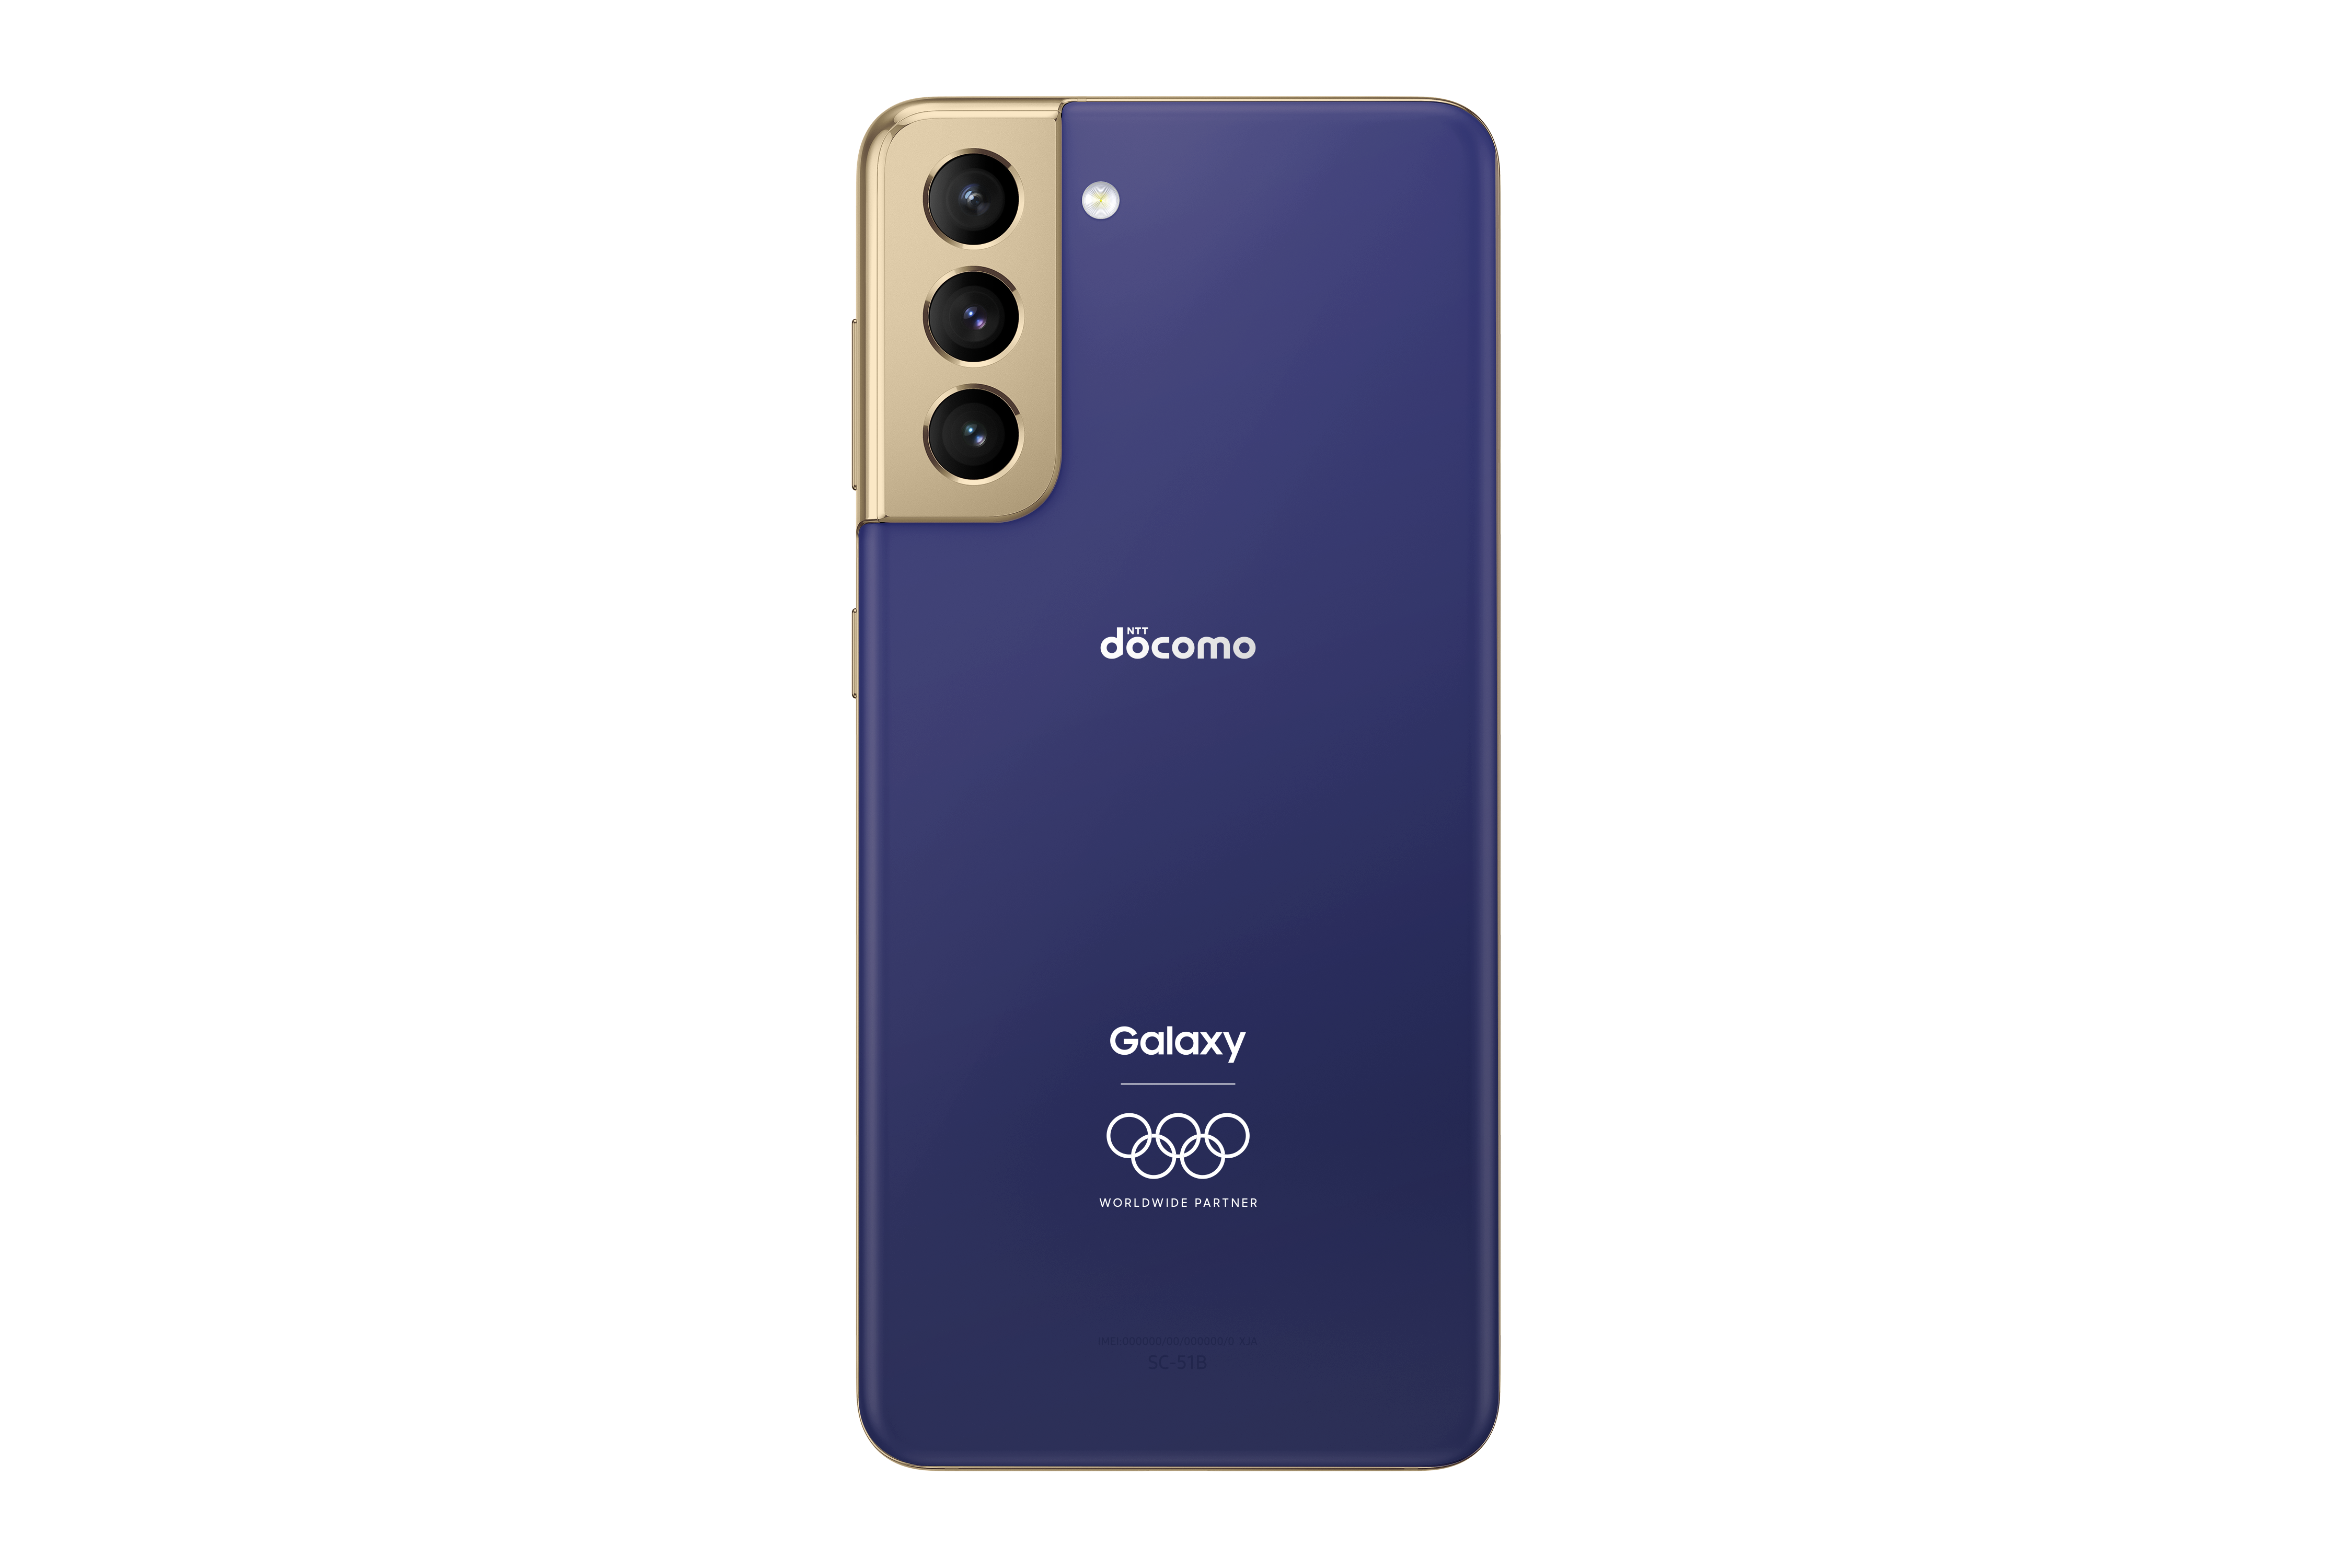 Galaxy S21 5g Olympic Games Edition が全国のドコモショップ Galaxy Harajukuでも購入可能に Galaxyのプレスリリース